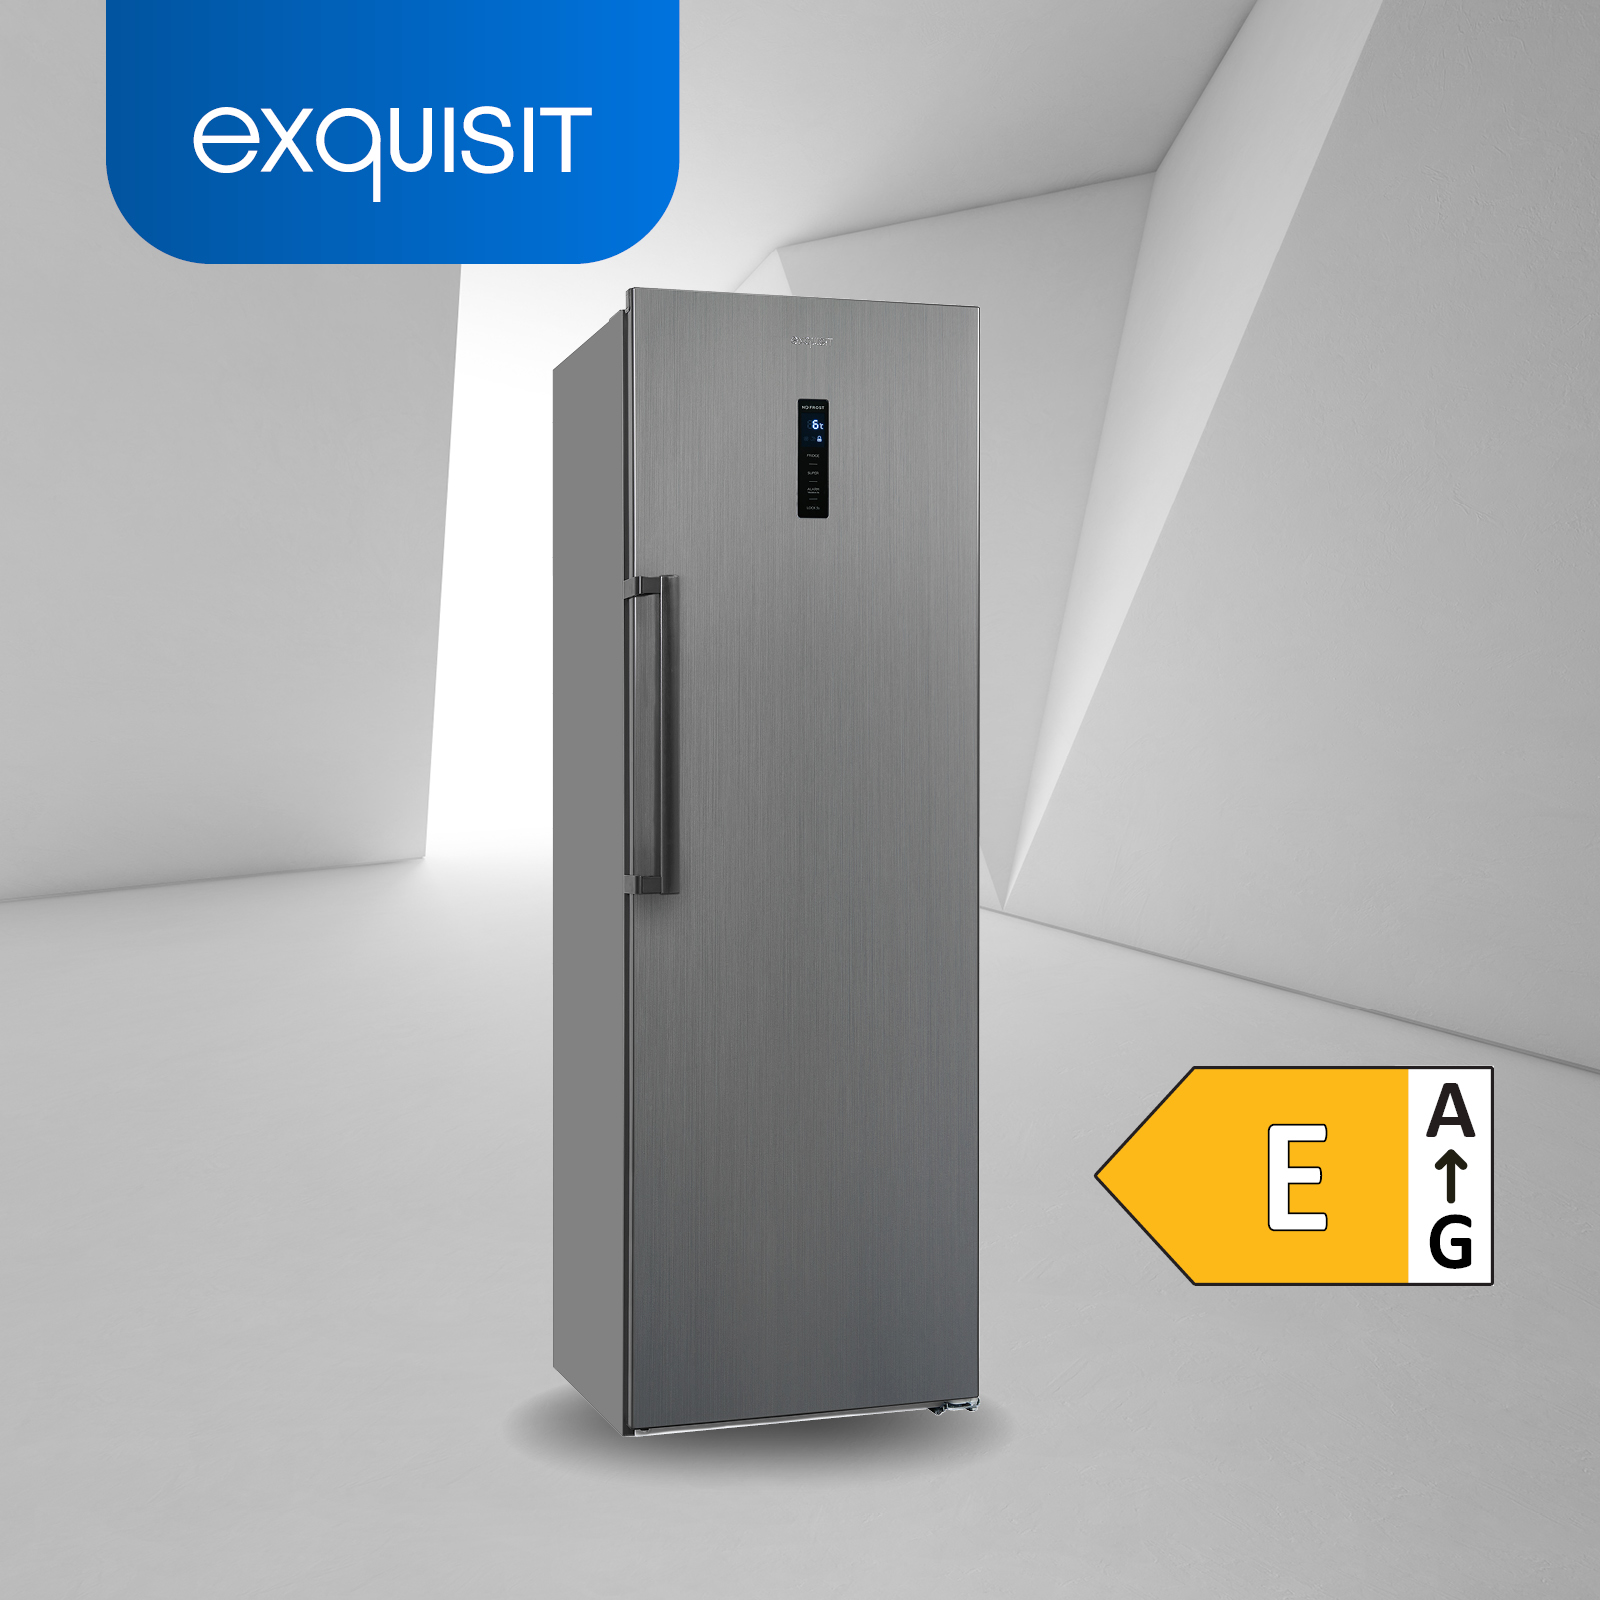 EXQUISIT KS360-V-HE-040E inoxlook-az (118,00 Edelstahloptik) E, 1850 kWh/Jahr, Kühlschrank mm hoch